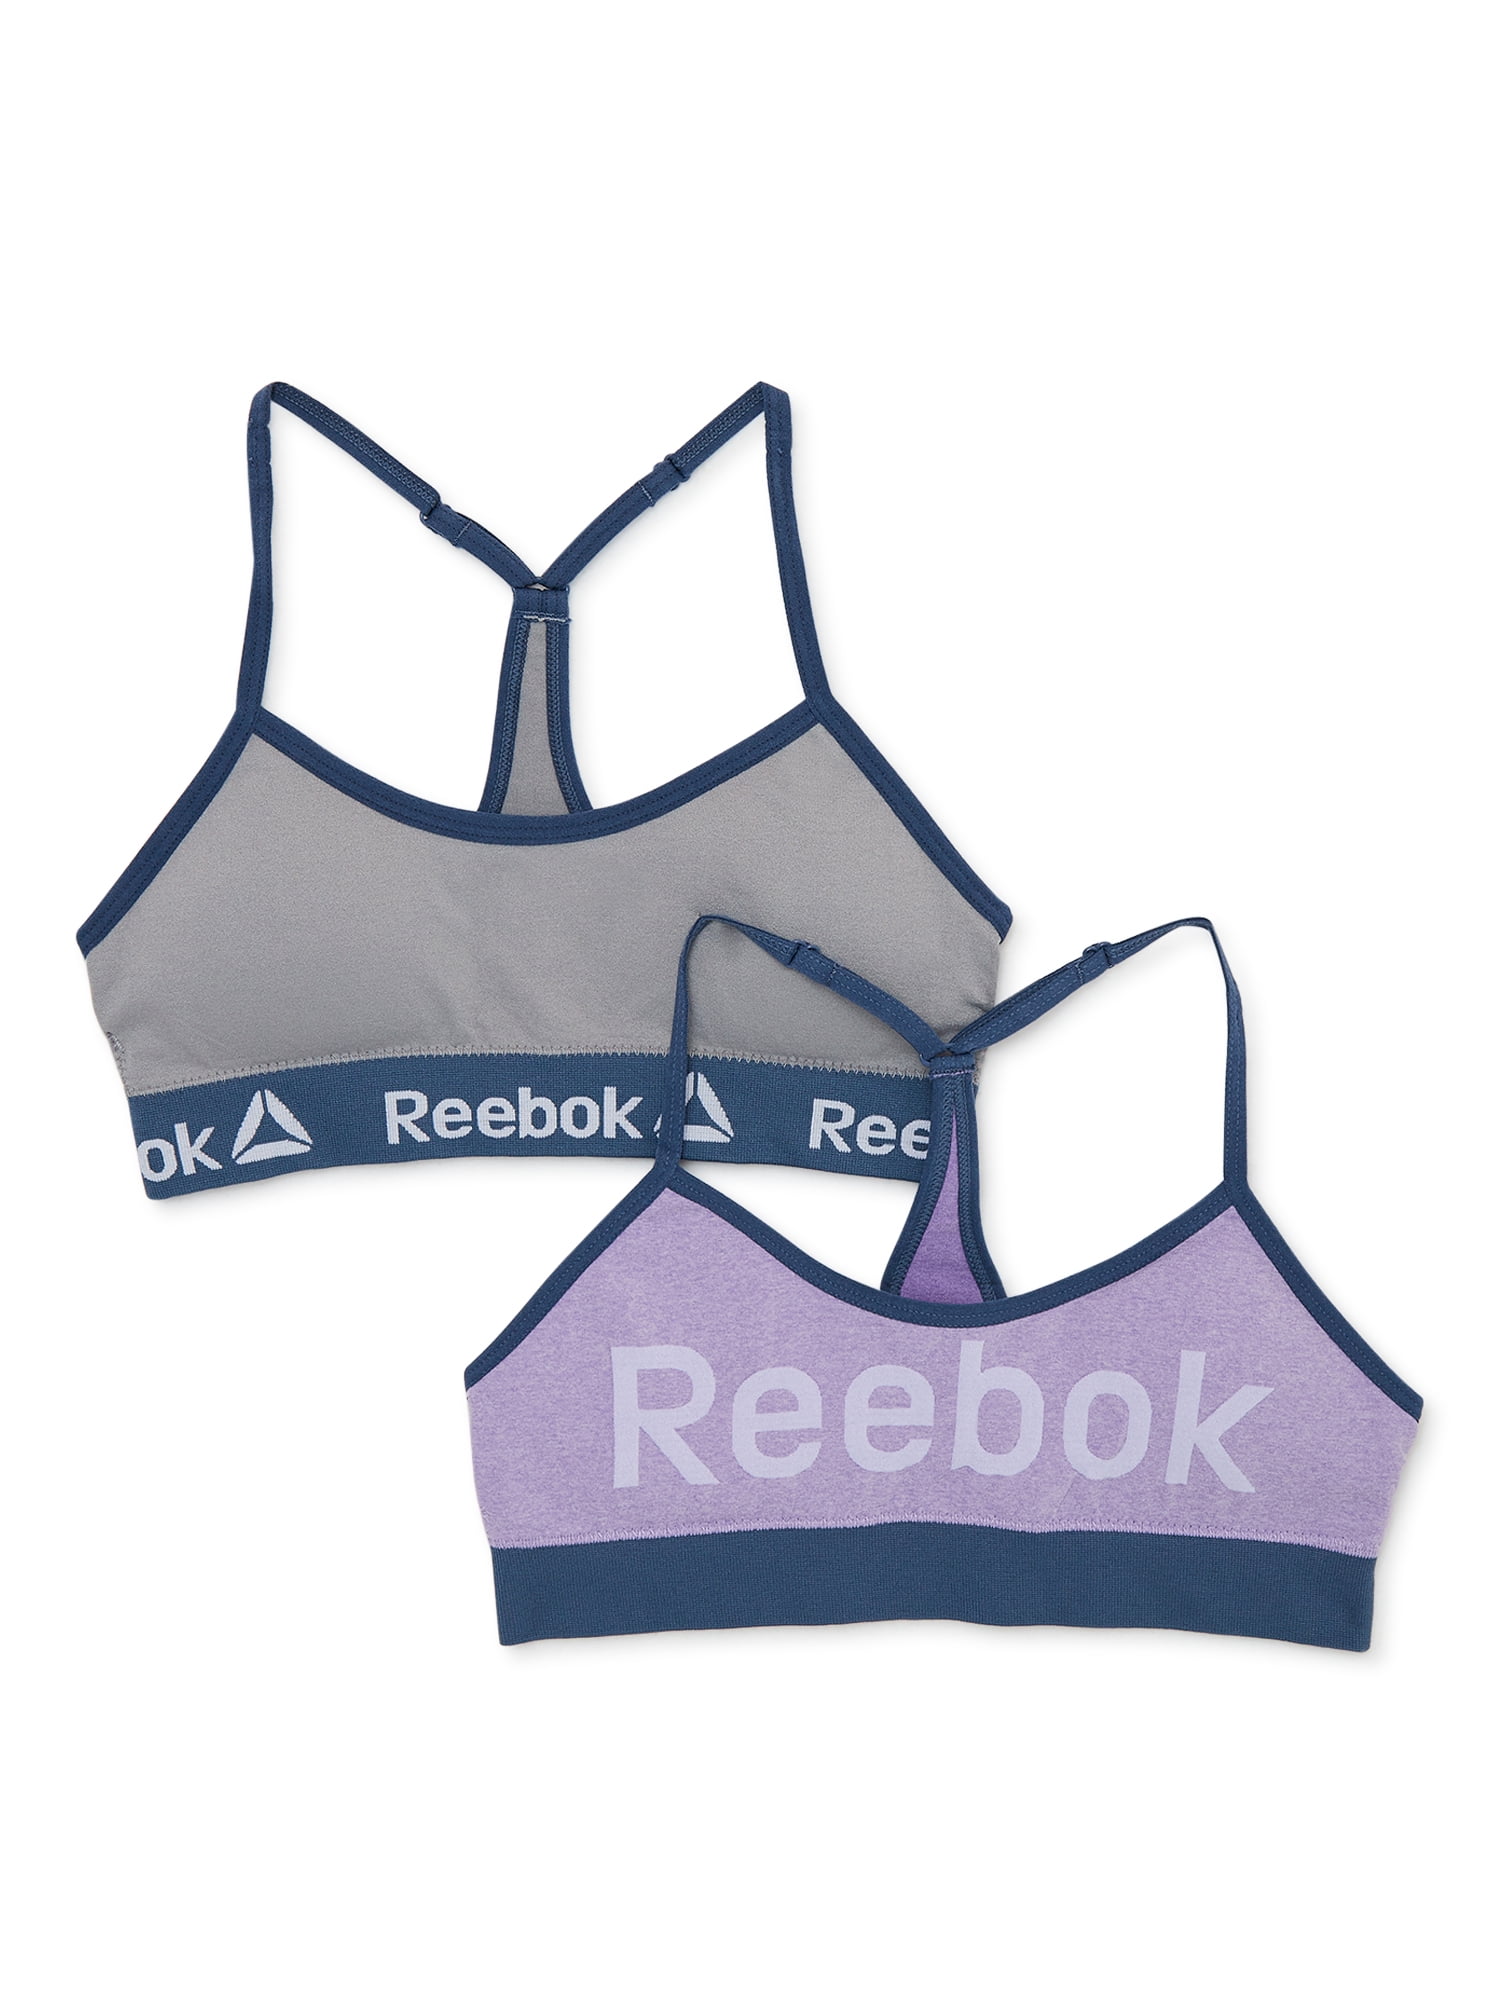 Reebok Women's Bra - Seamless Performance Cami Bralette (2 Pack